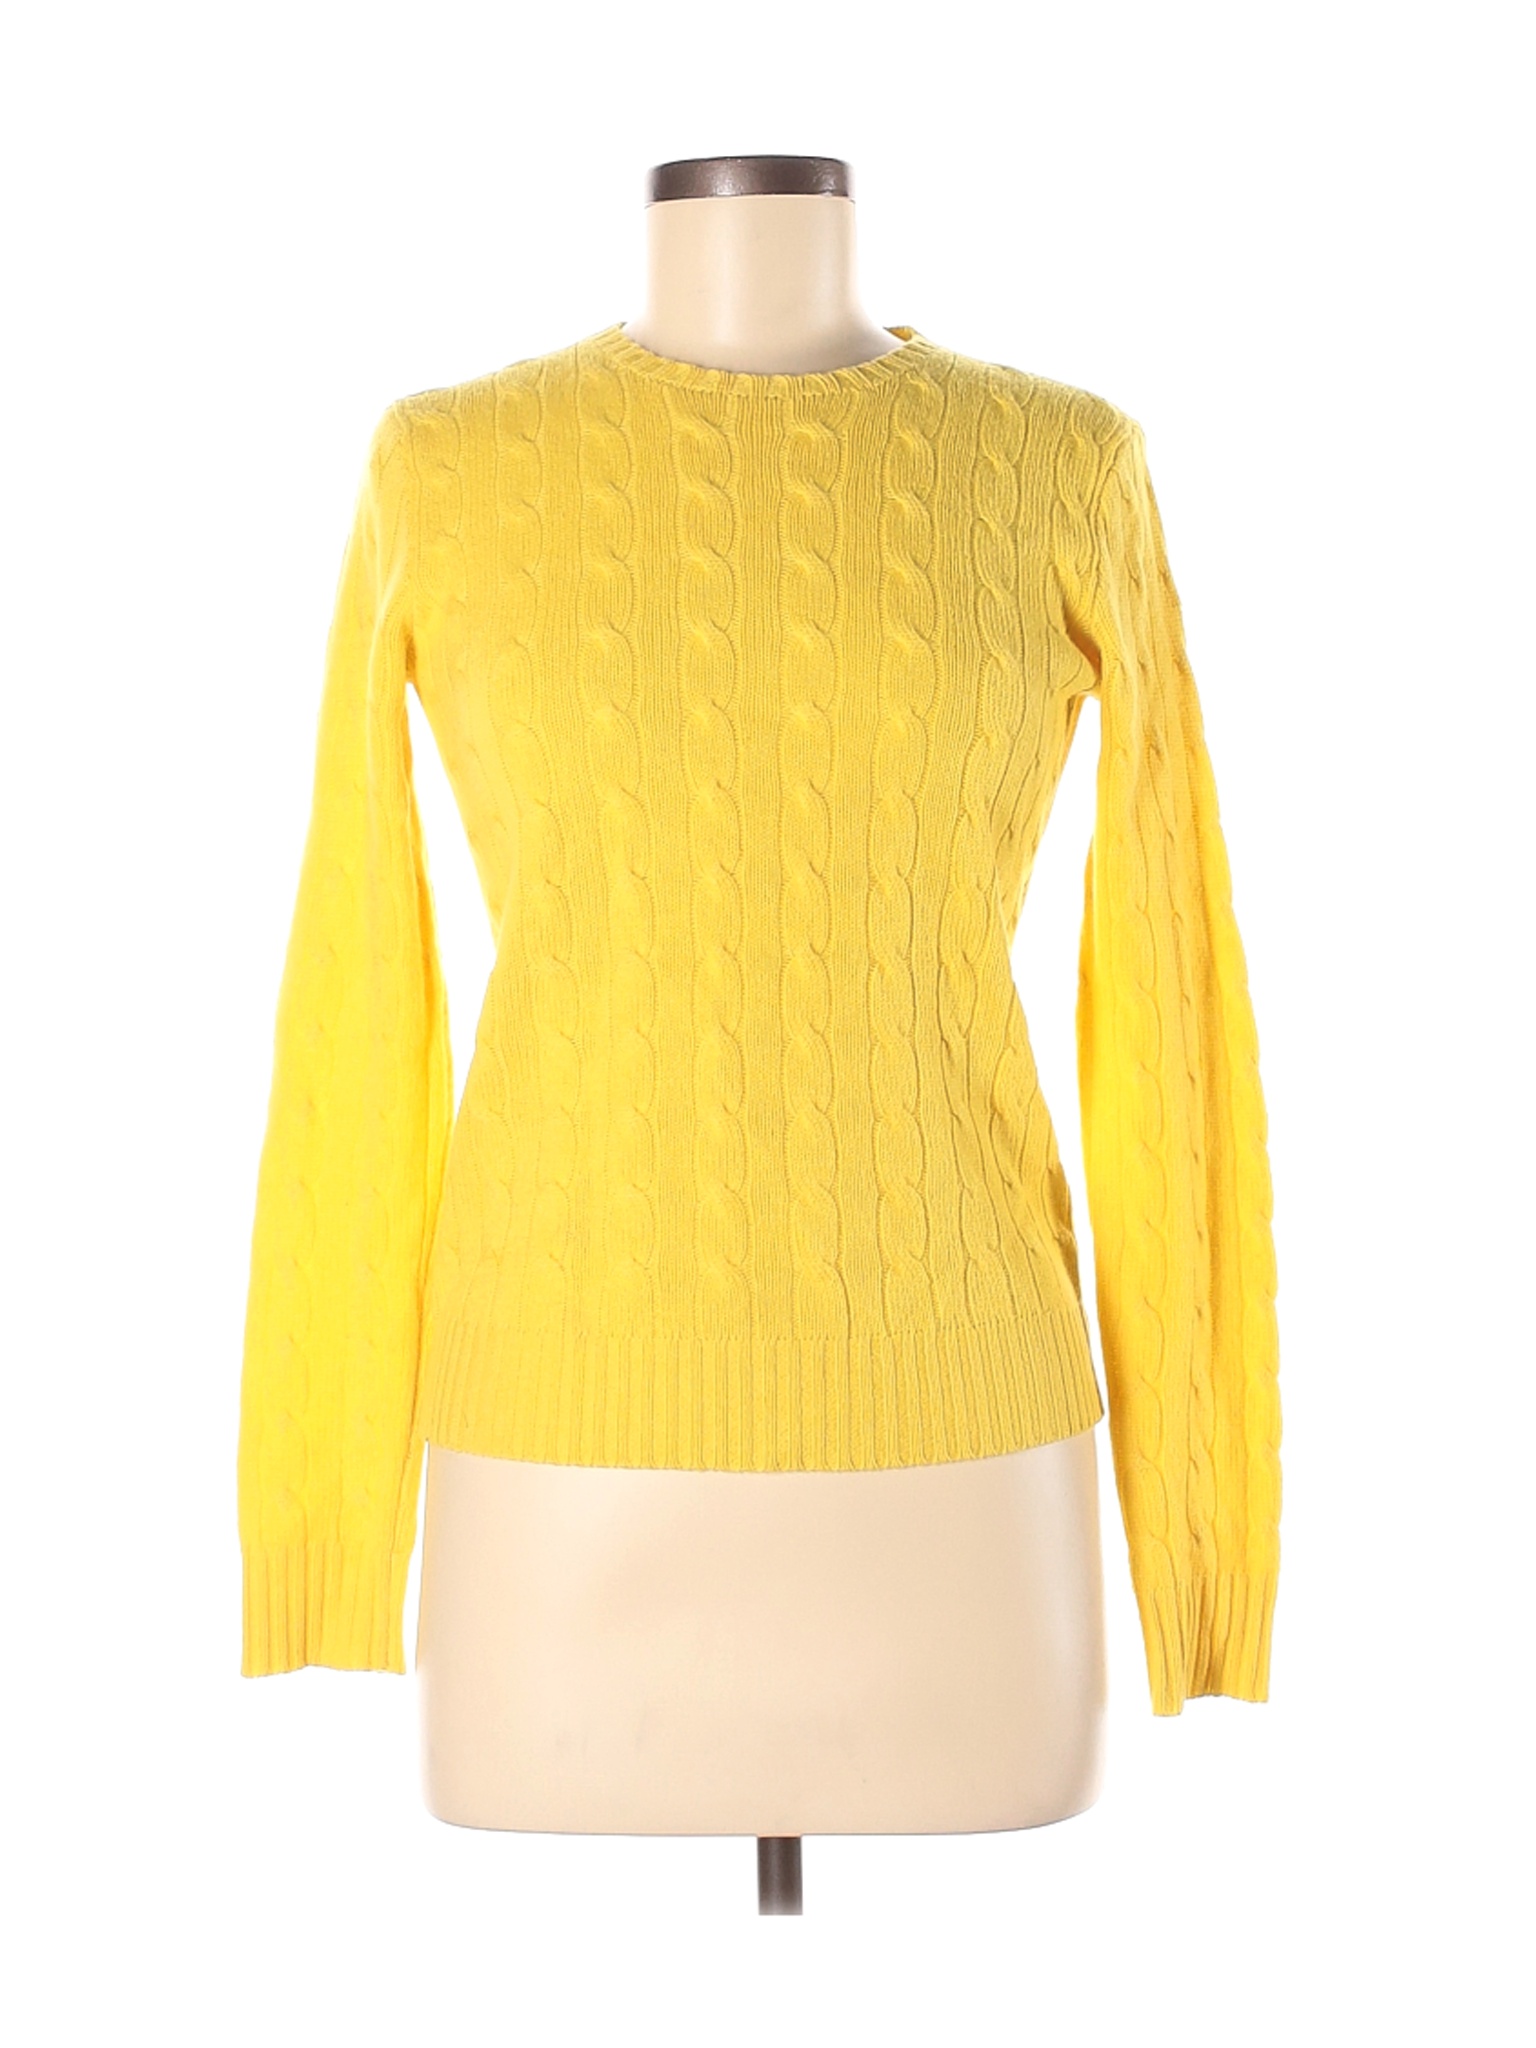 Ralph Lauren Women Yellow Pullover Sweater M | eBay